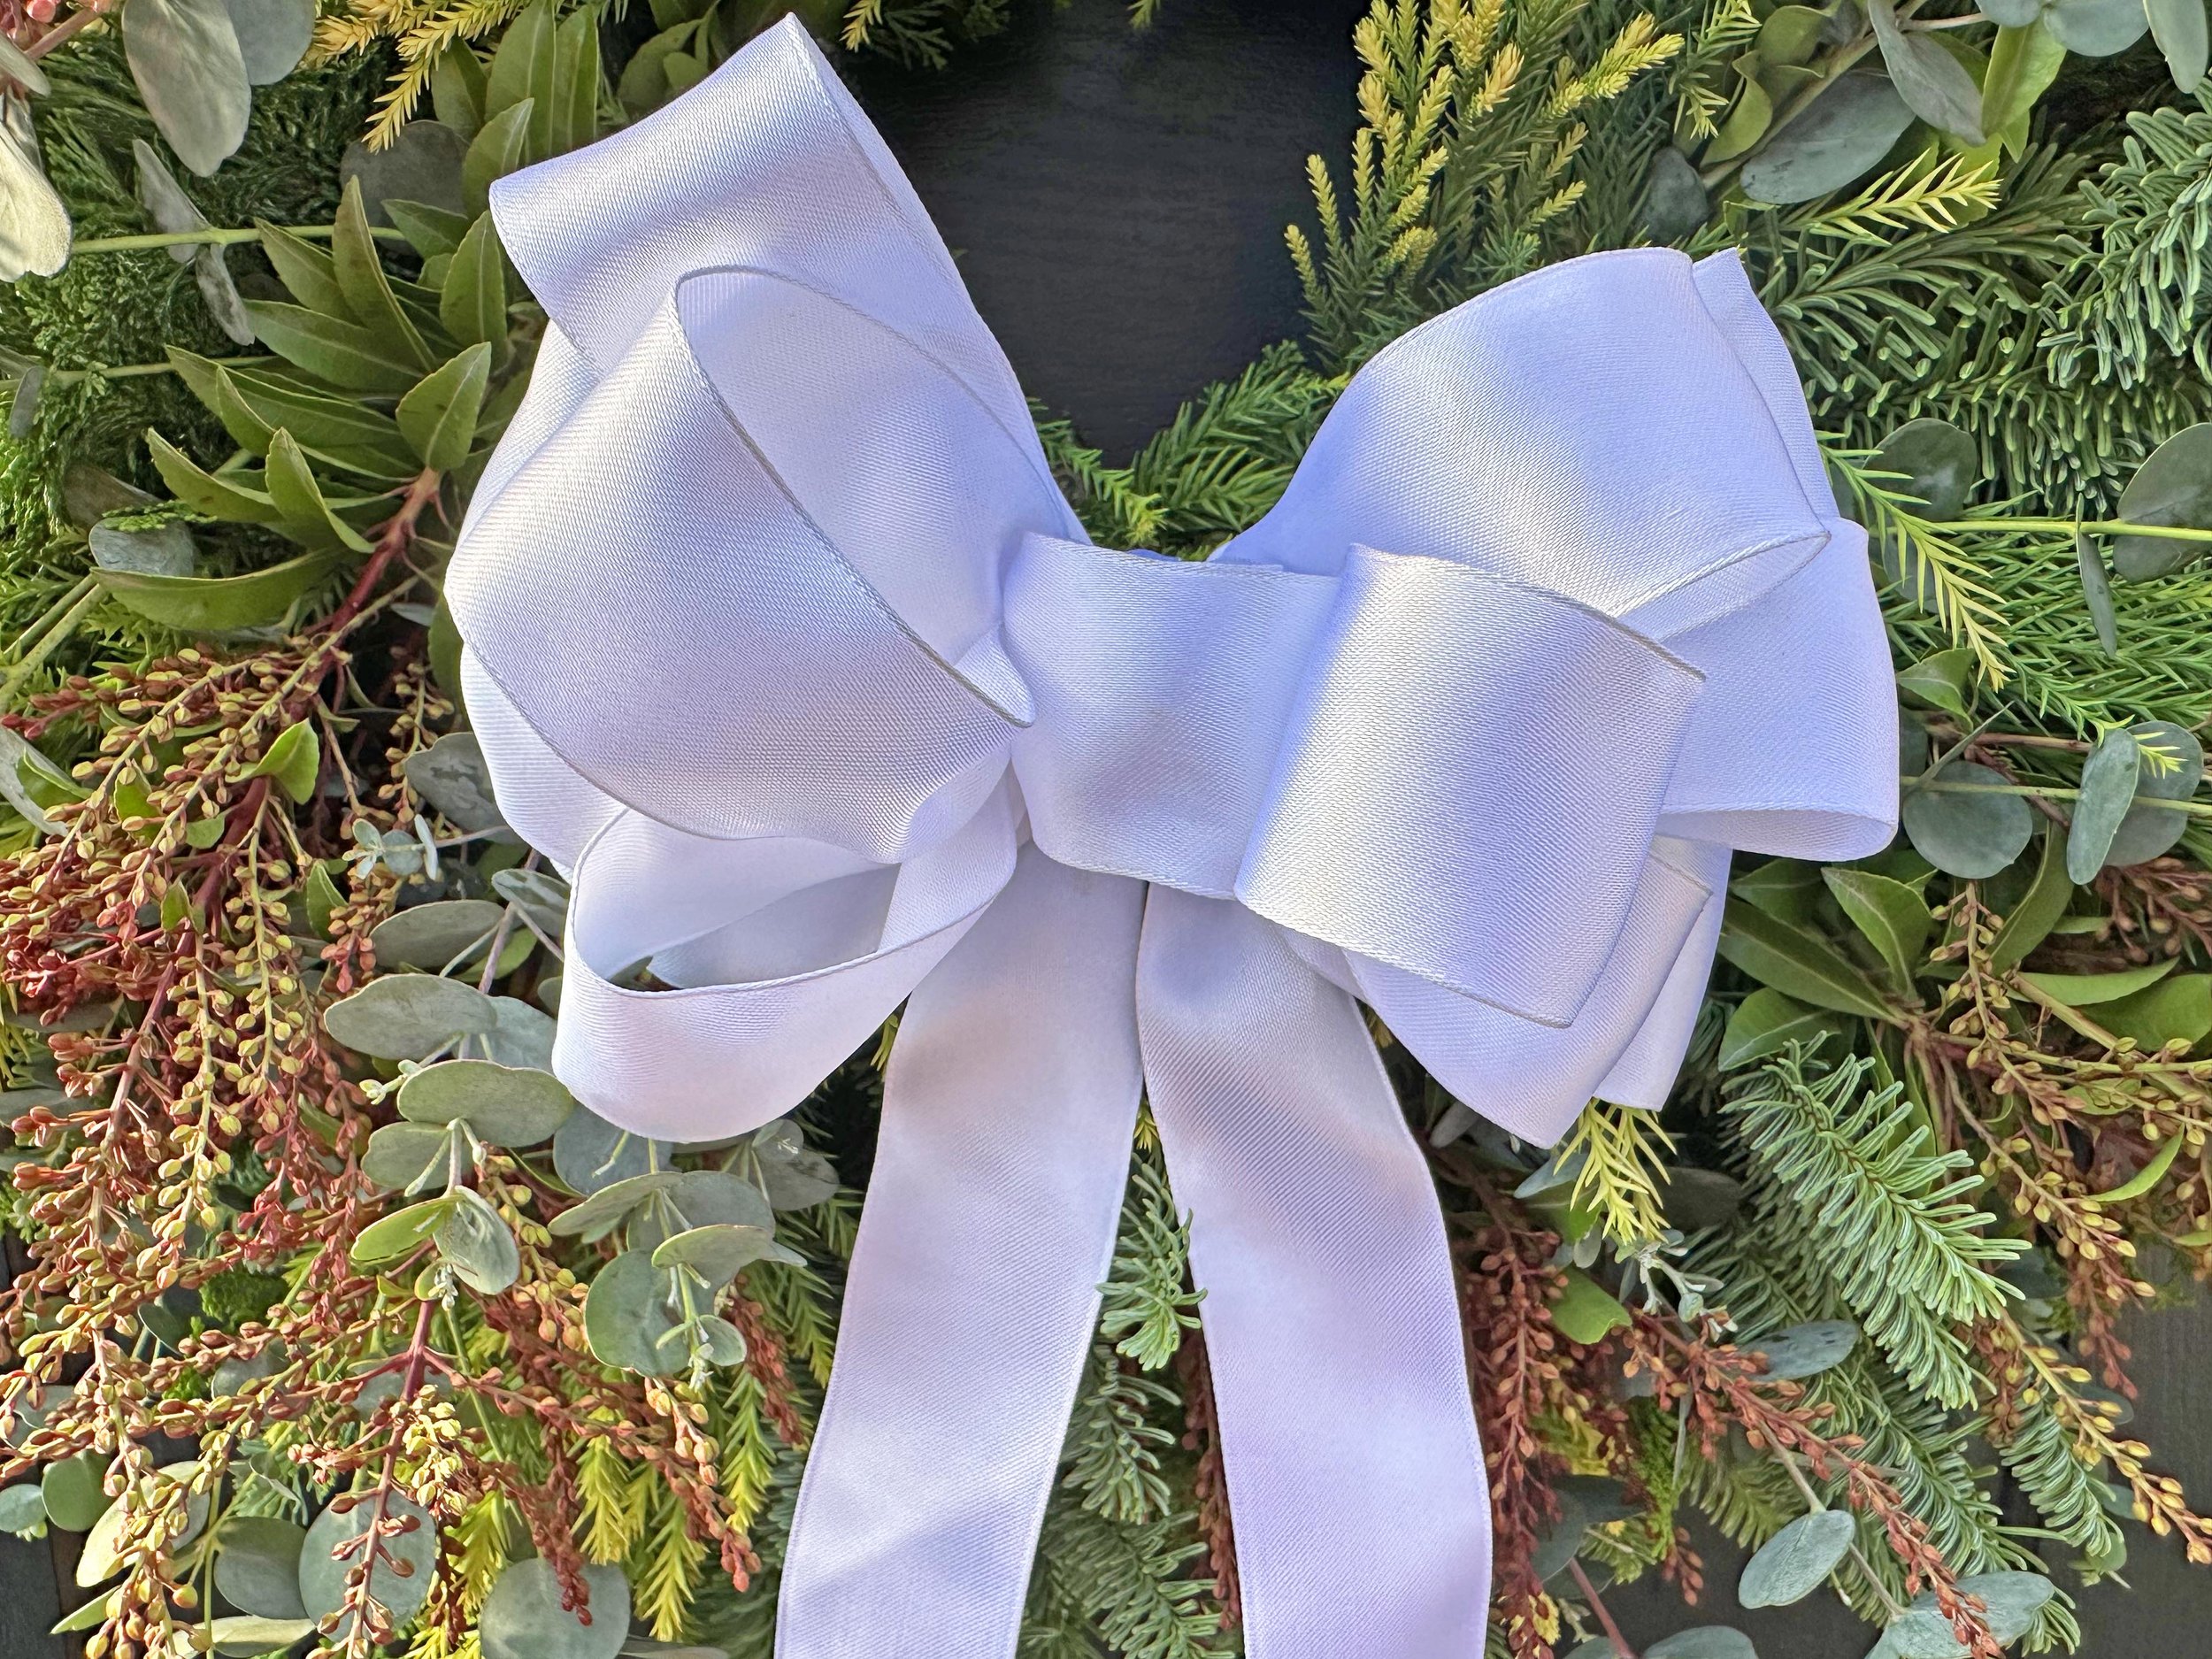 Wreath #8 with white bow3.jpg